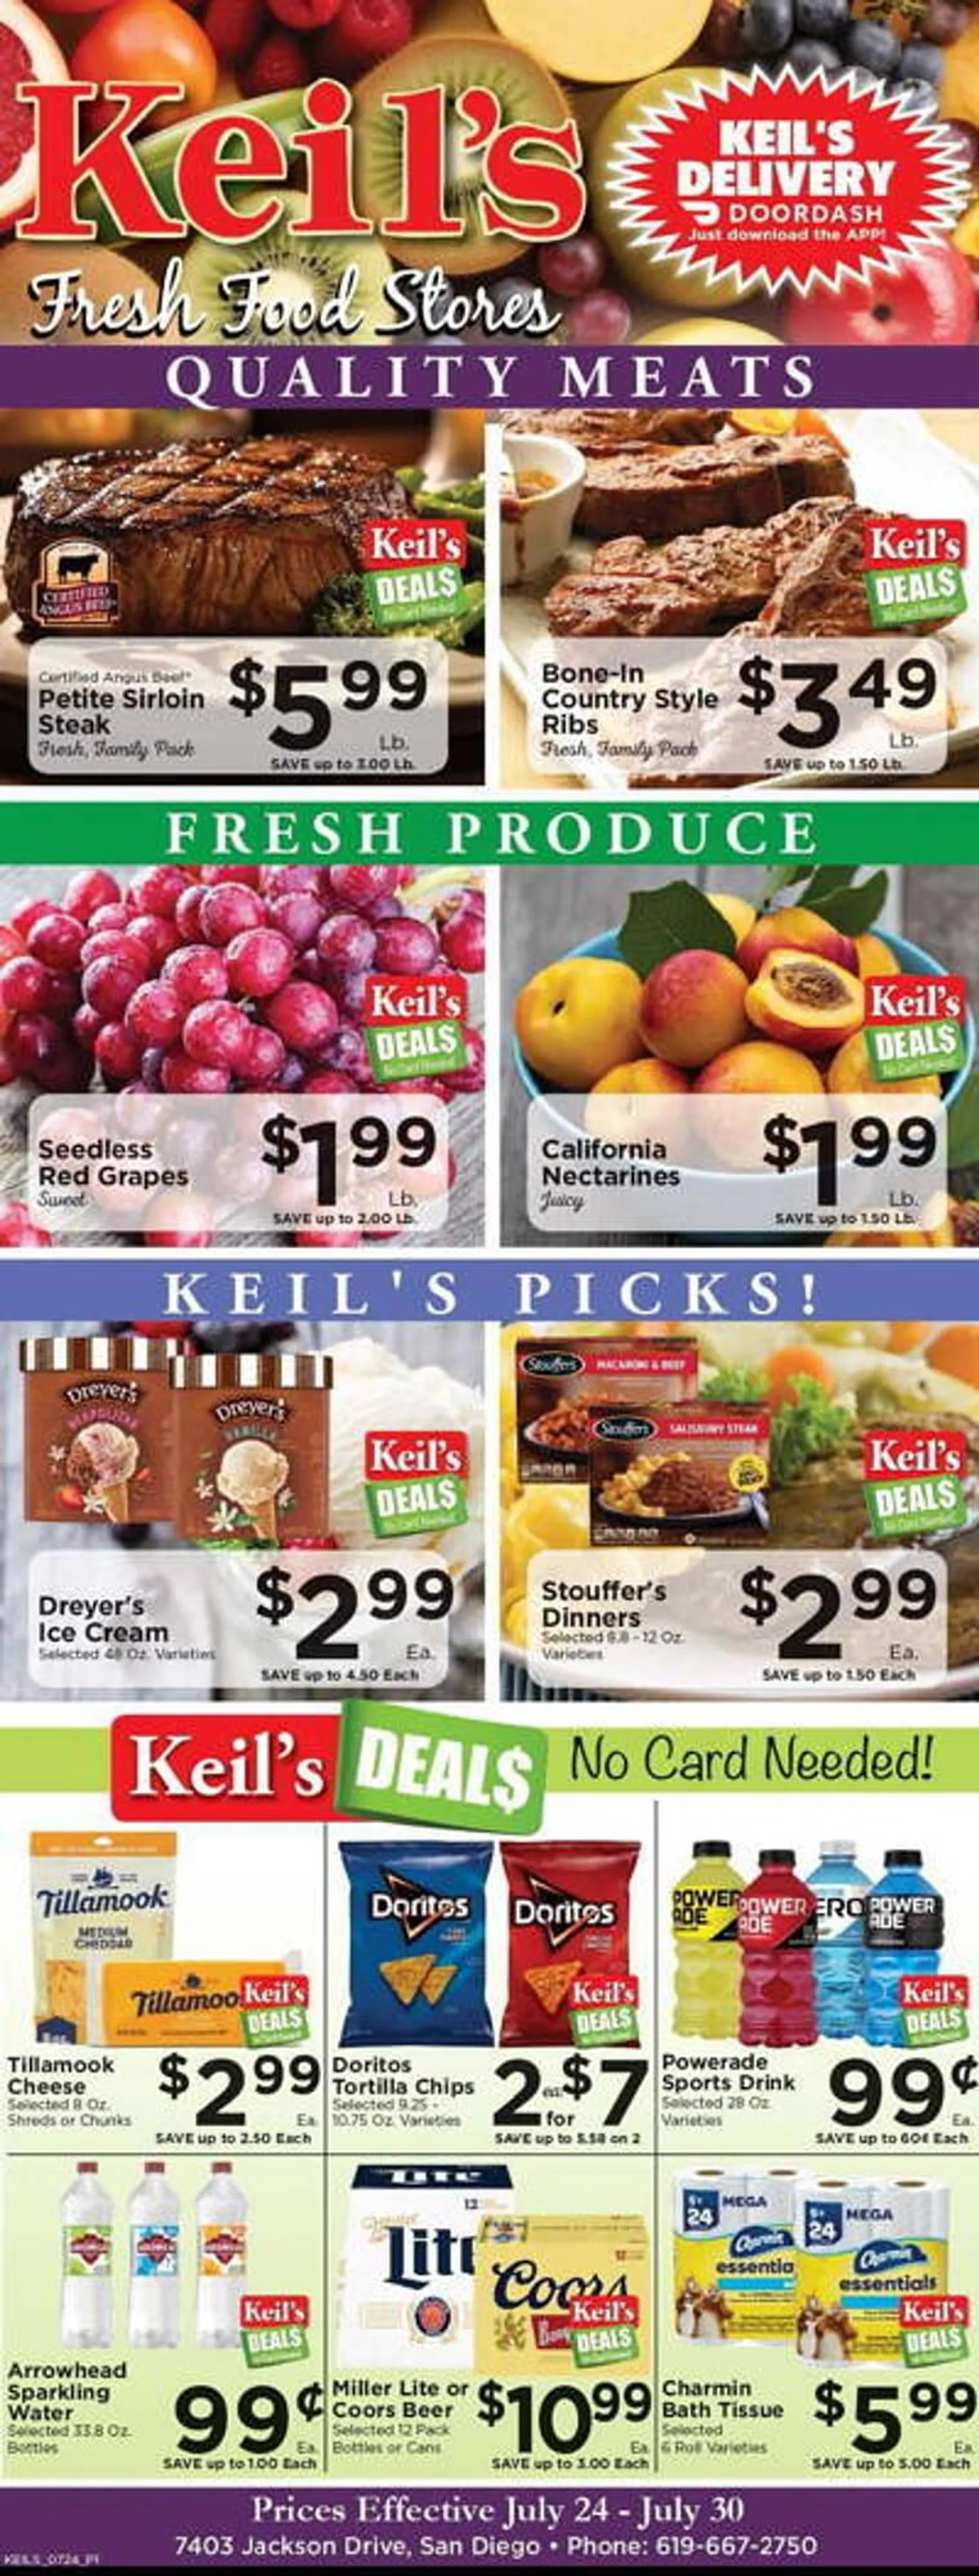 Keils Fresh Food Stores Weekly Ad - 1